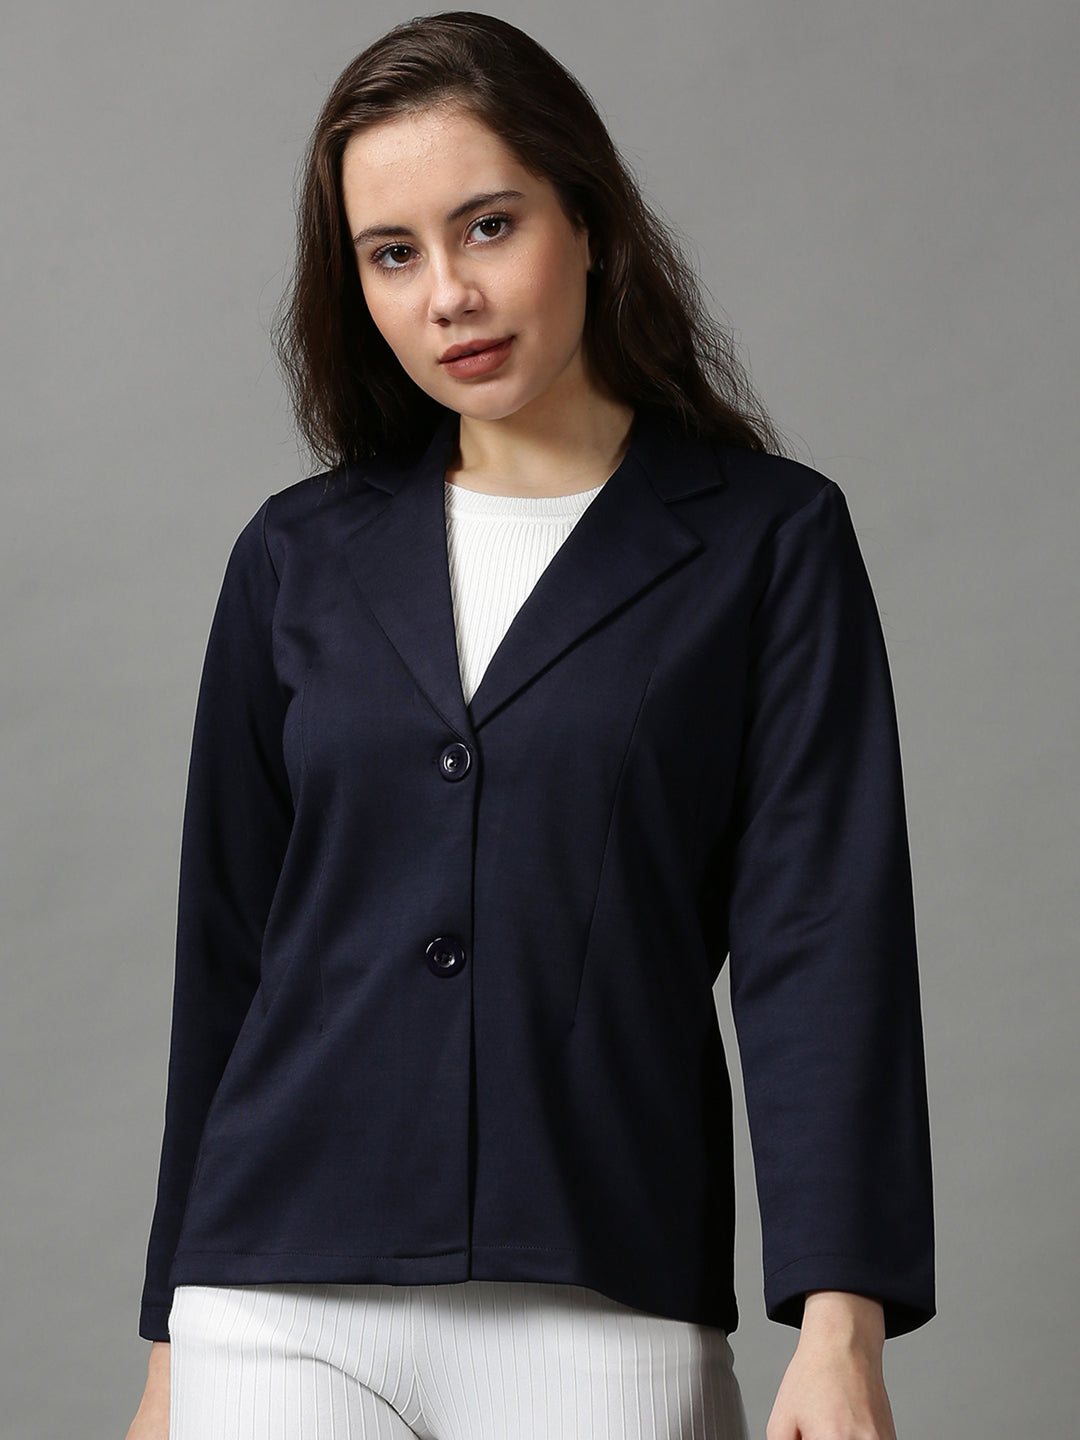 Women's Navy Blue Solid Open Front Blazer